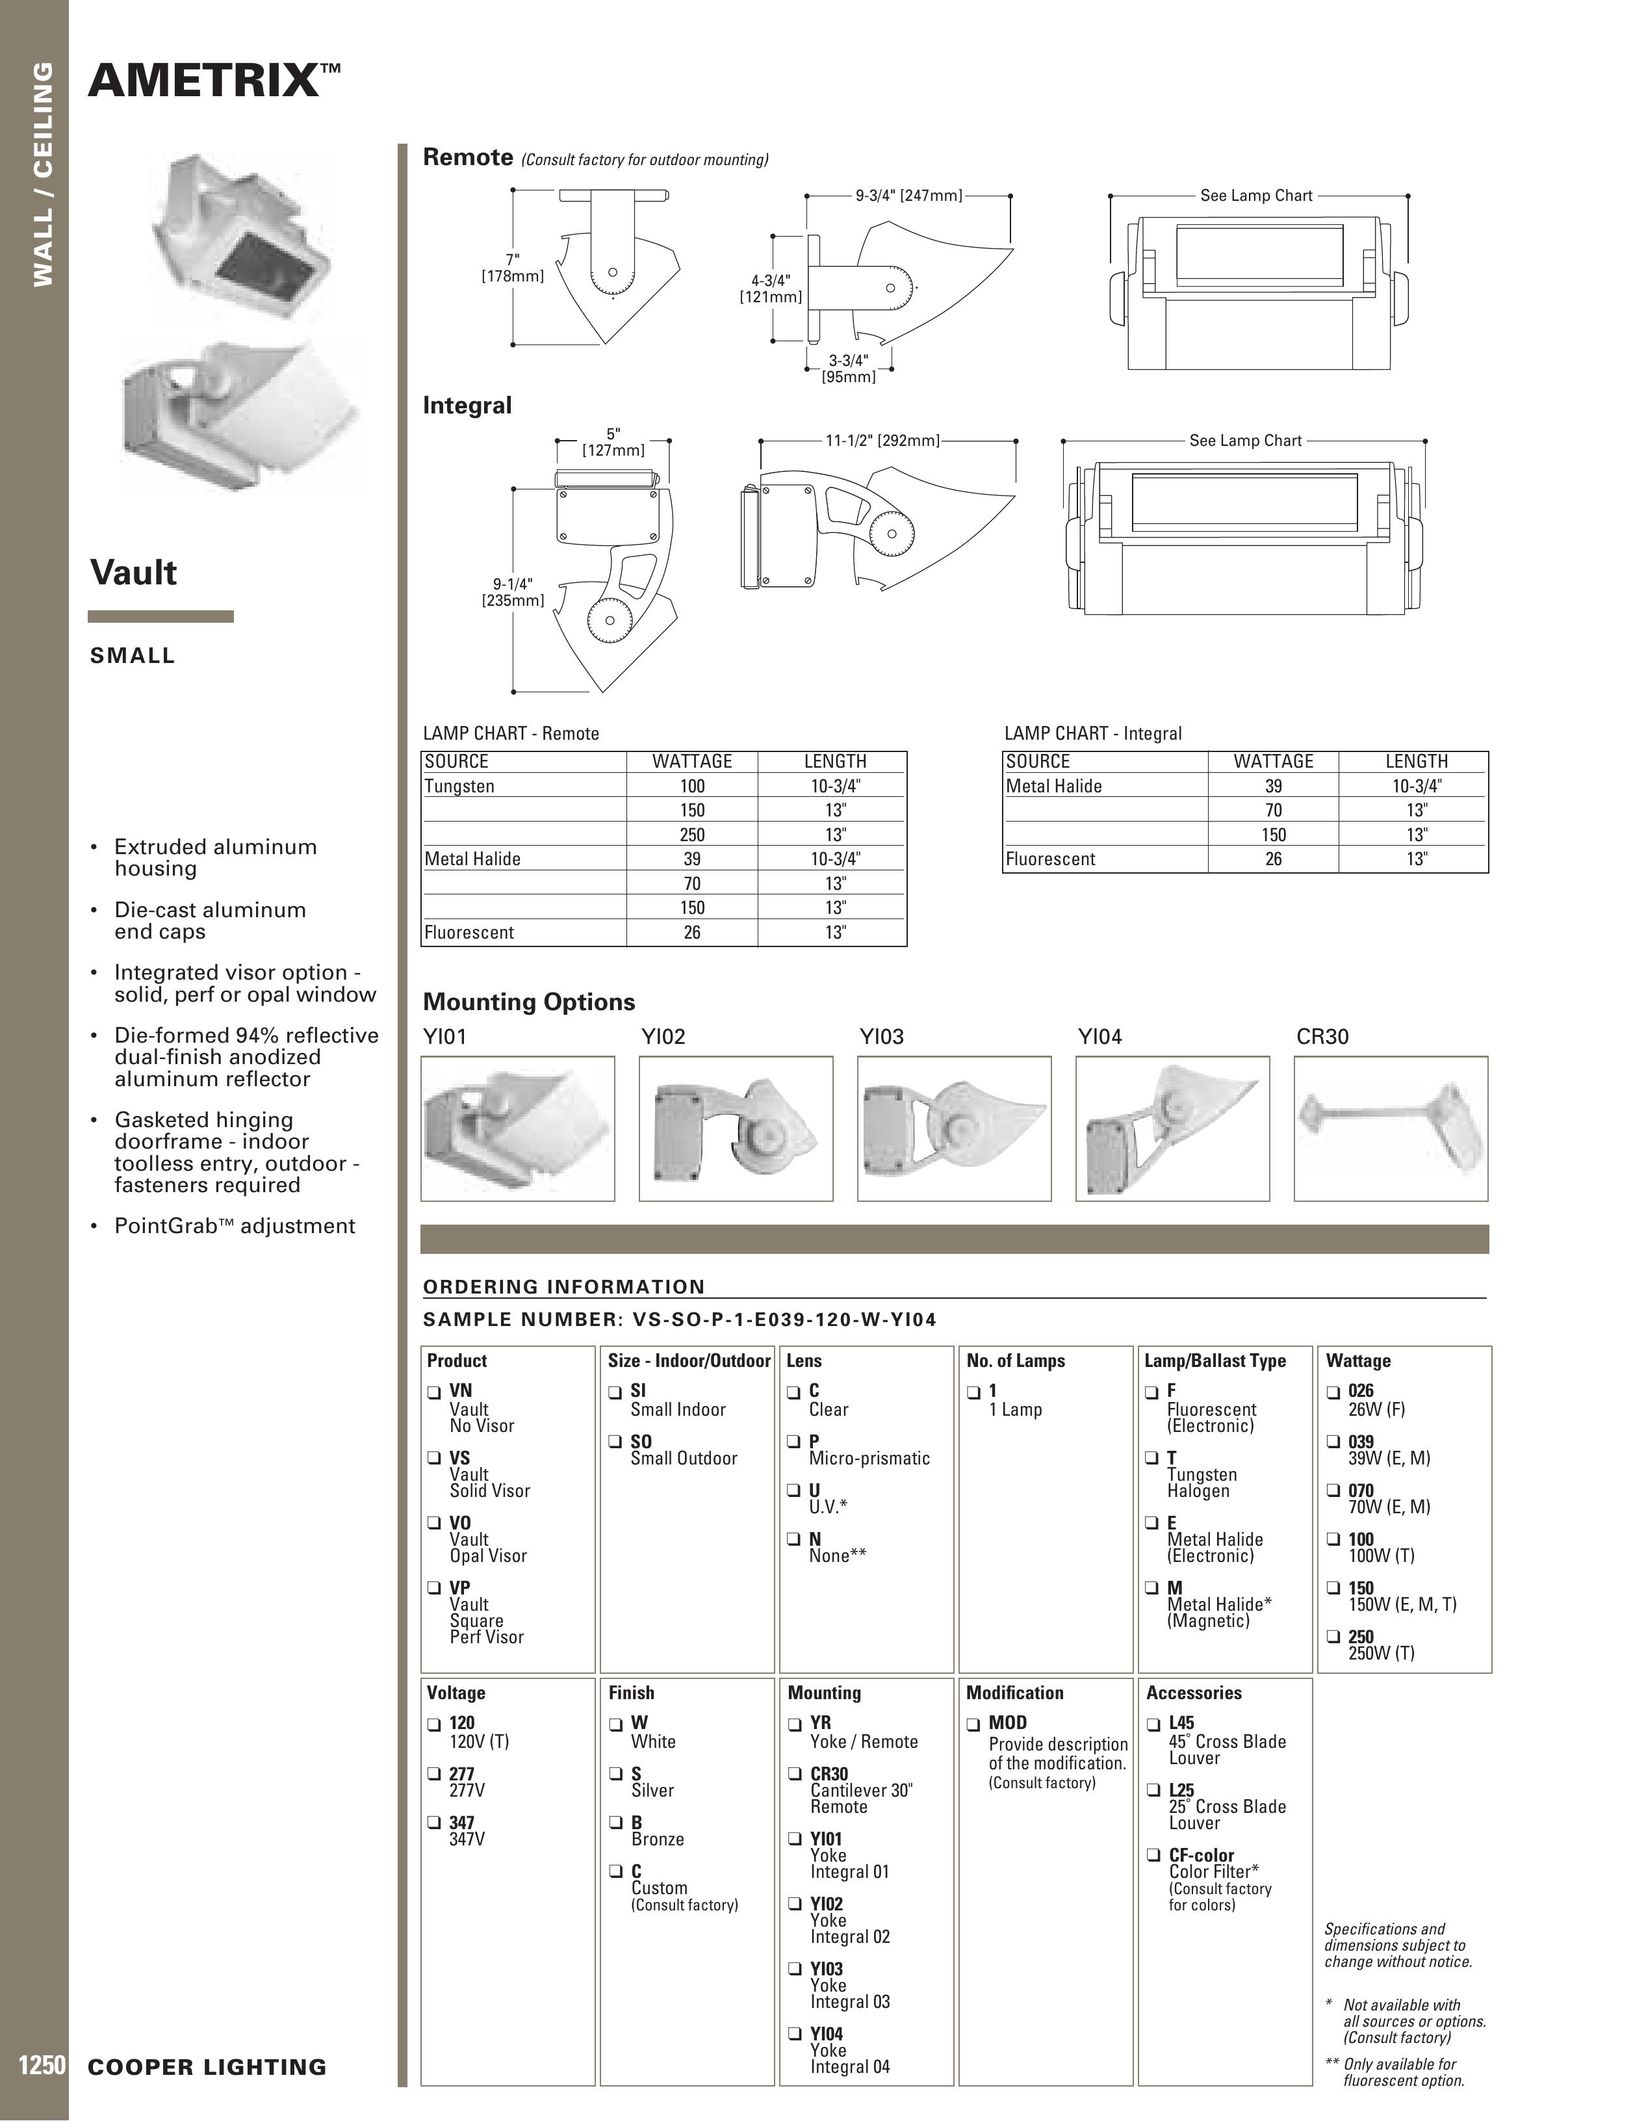 EdgeStar Vault Indoor Furnishings User Manual